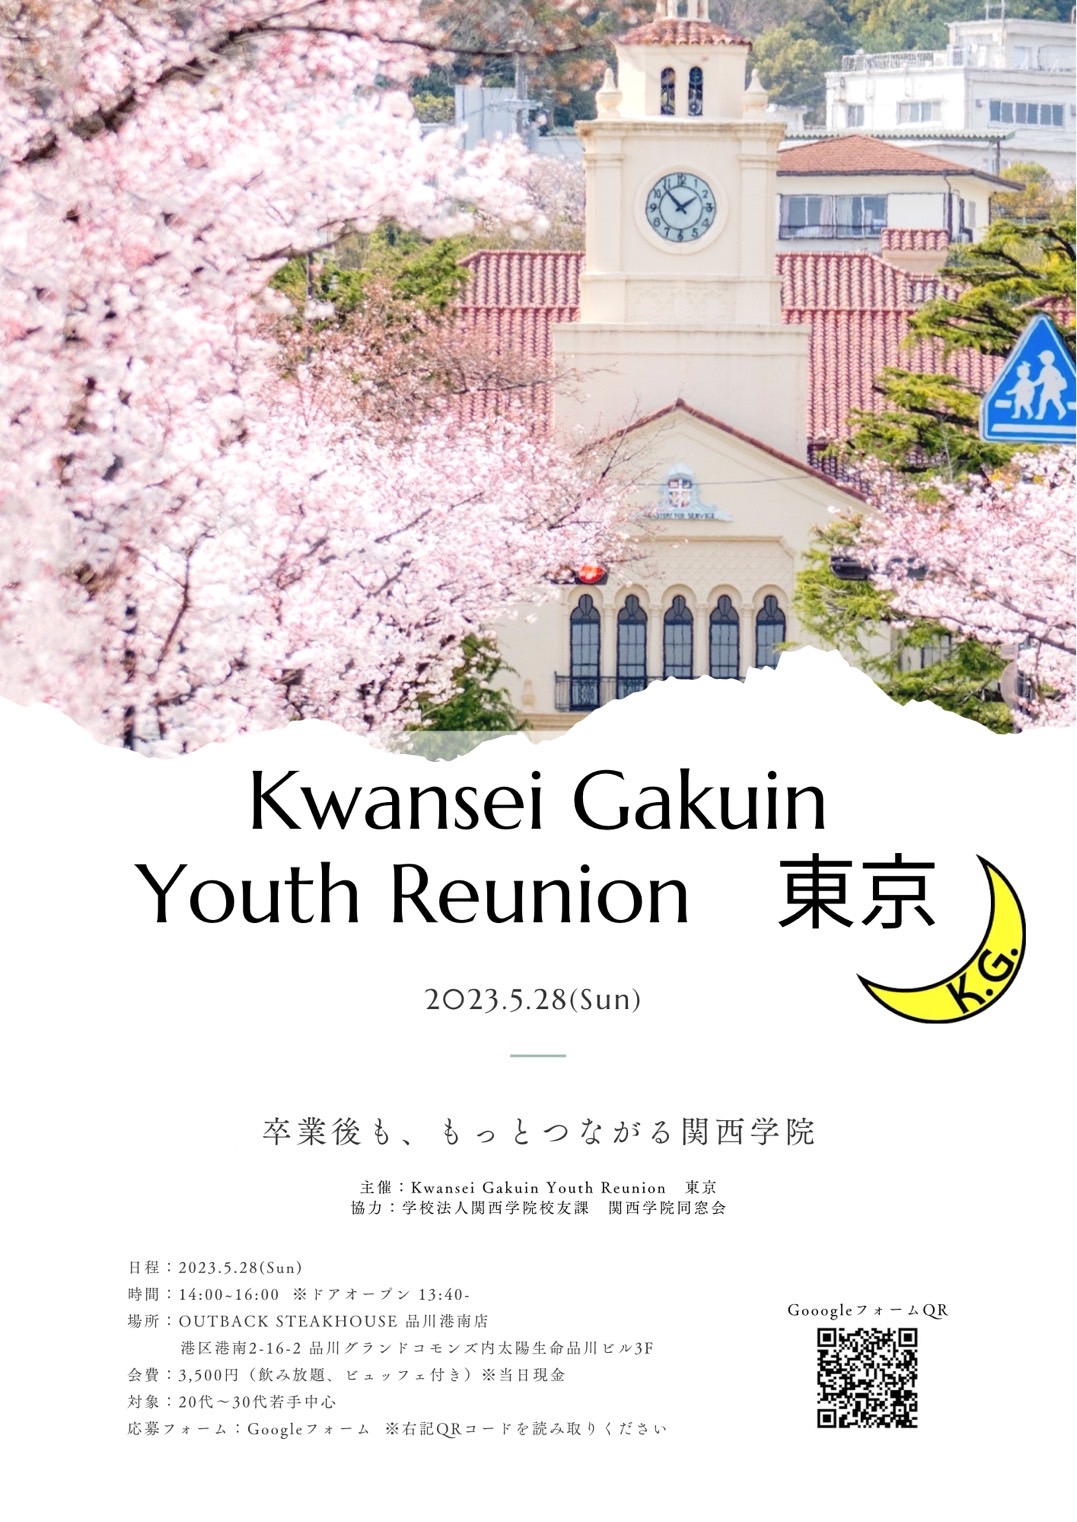 【Kwansei Gakuin Youth Reunion 東京】 開催のお知らせ